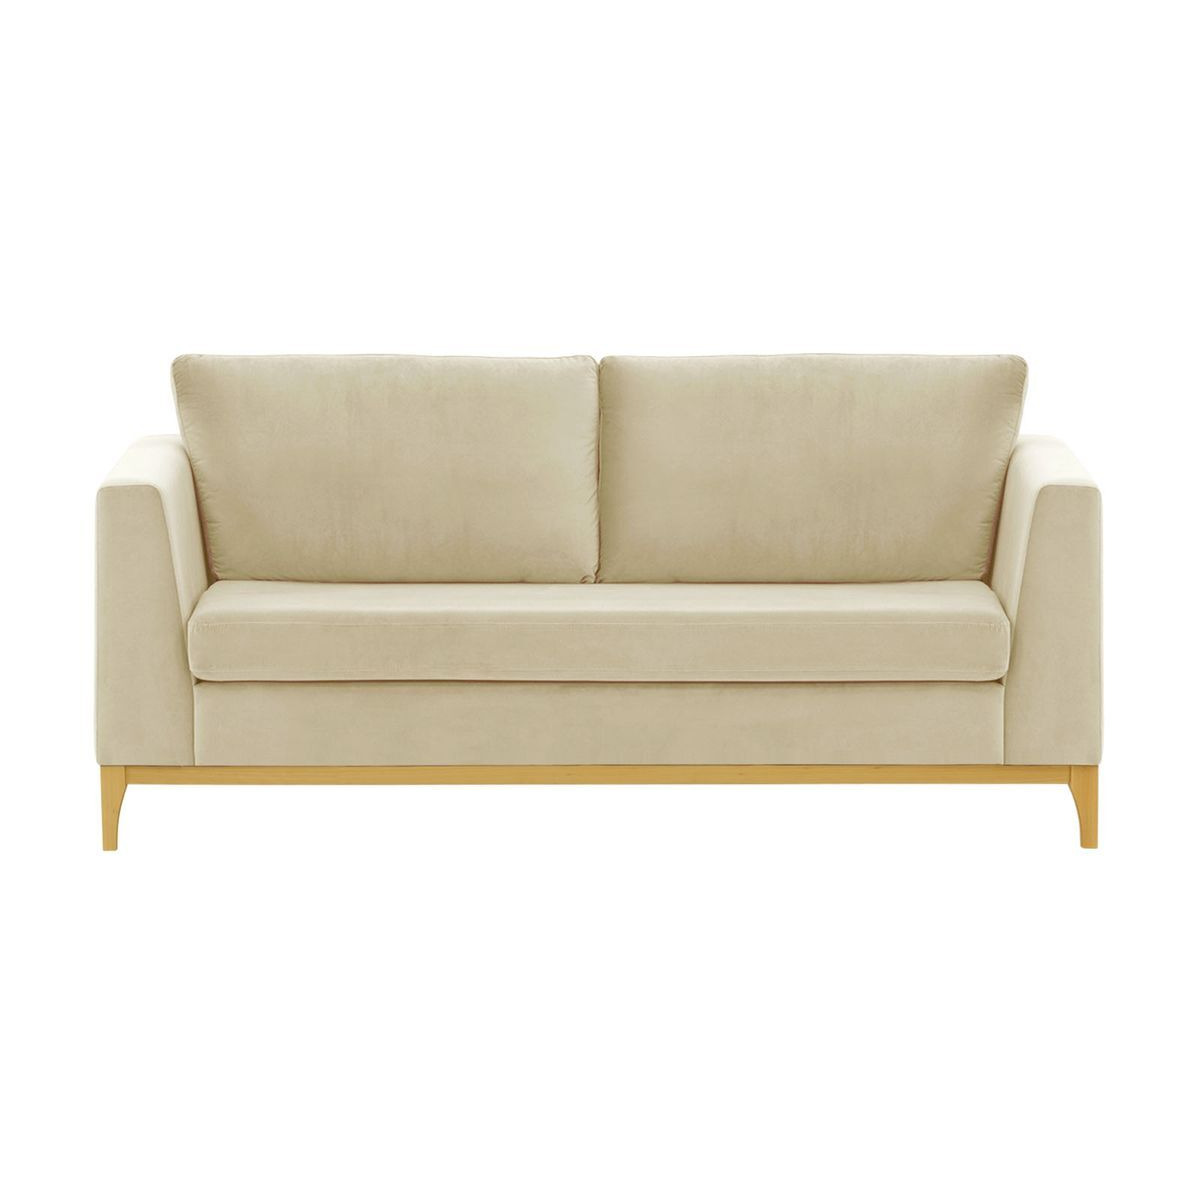 Gosena Wood 2,5 Seater Sofa, light beige, Leg colour: like oak - image 1